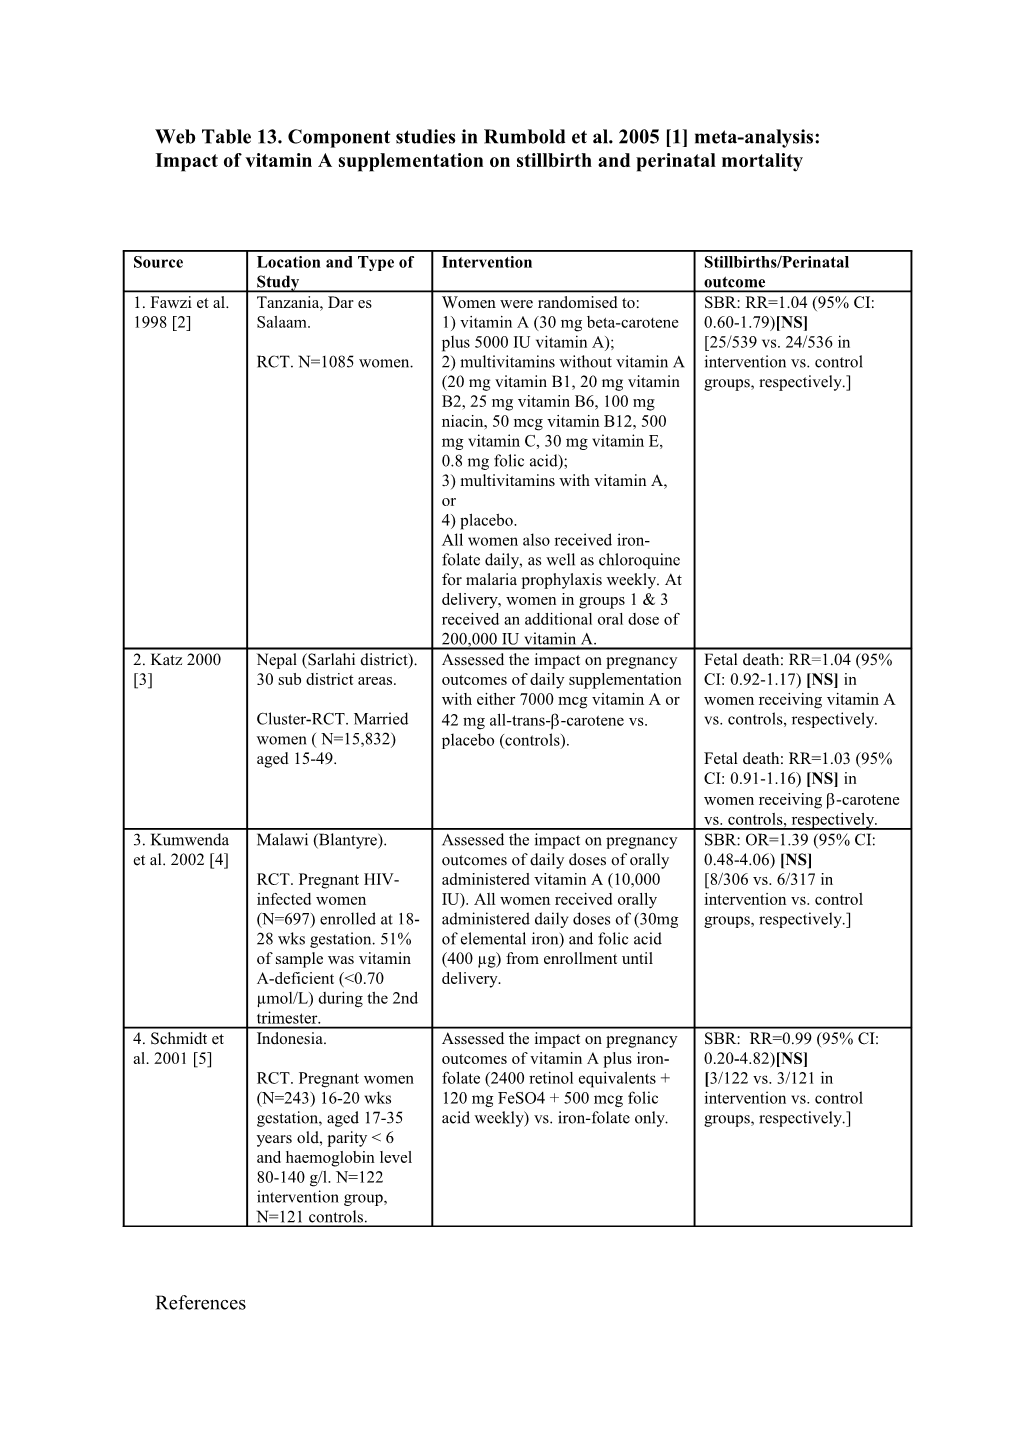 Web Table 13. Component Studies in Rumbold Et Al. 2005 1 Meta-Analysis: Impact of Vitamin